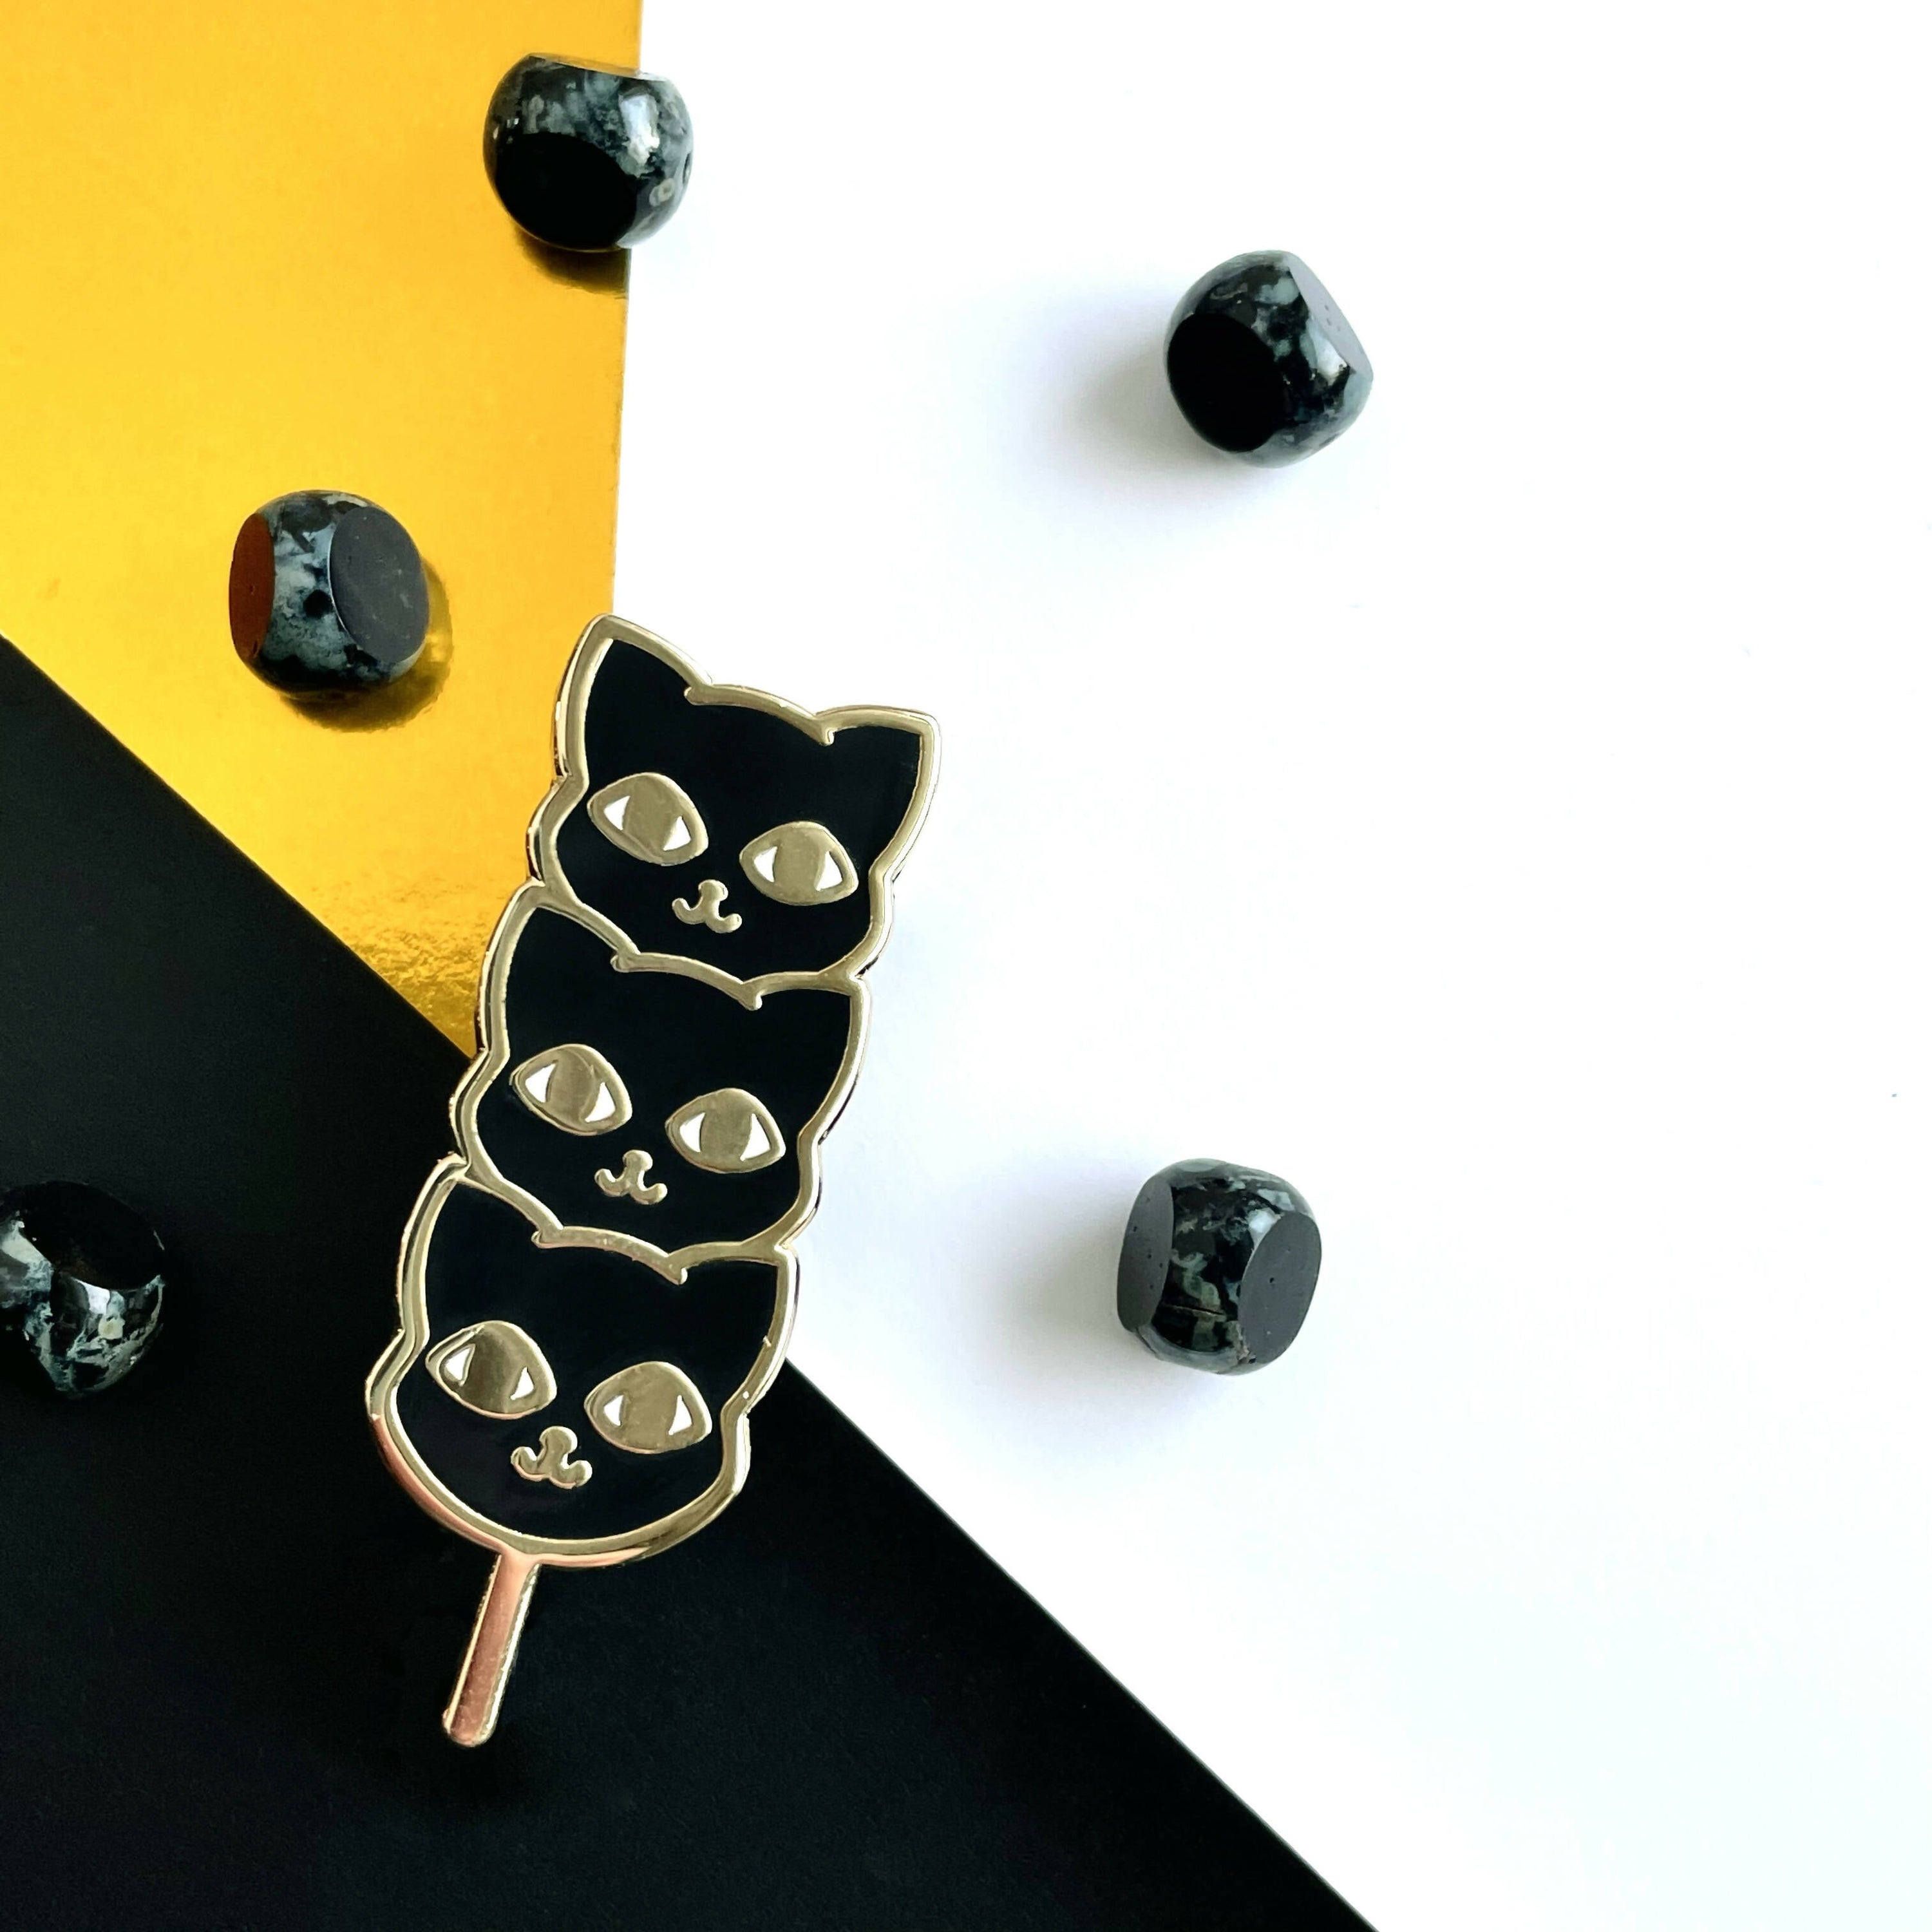 Pin Black Kitty Cat Dango Mochi • Enamel Pin